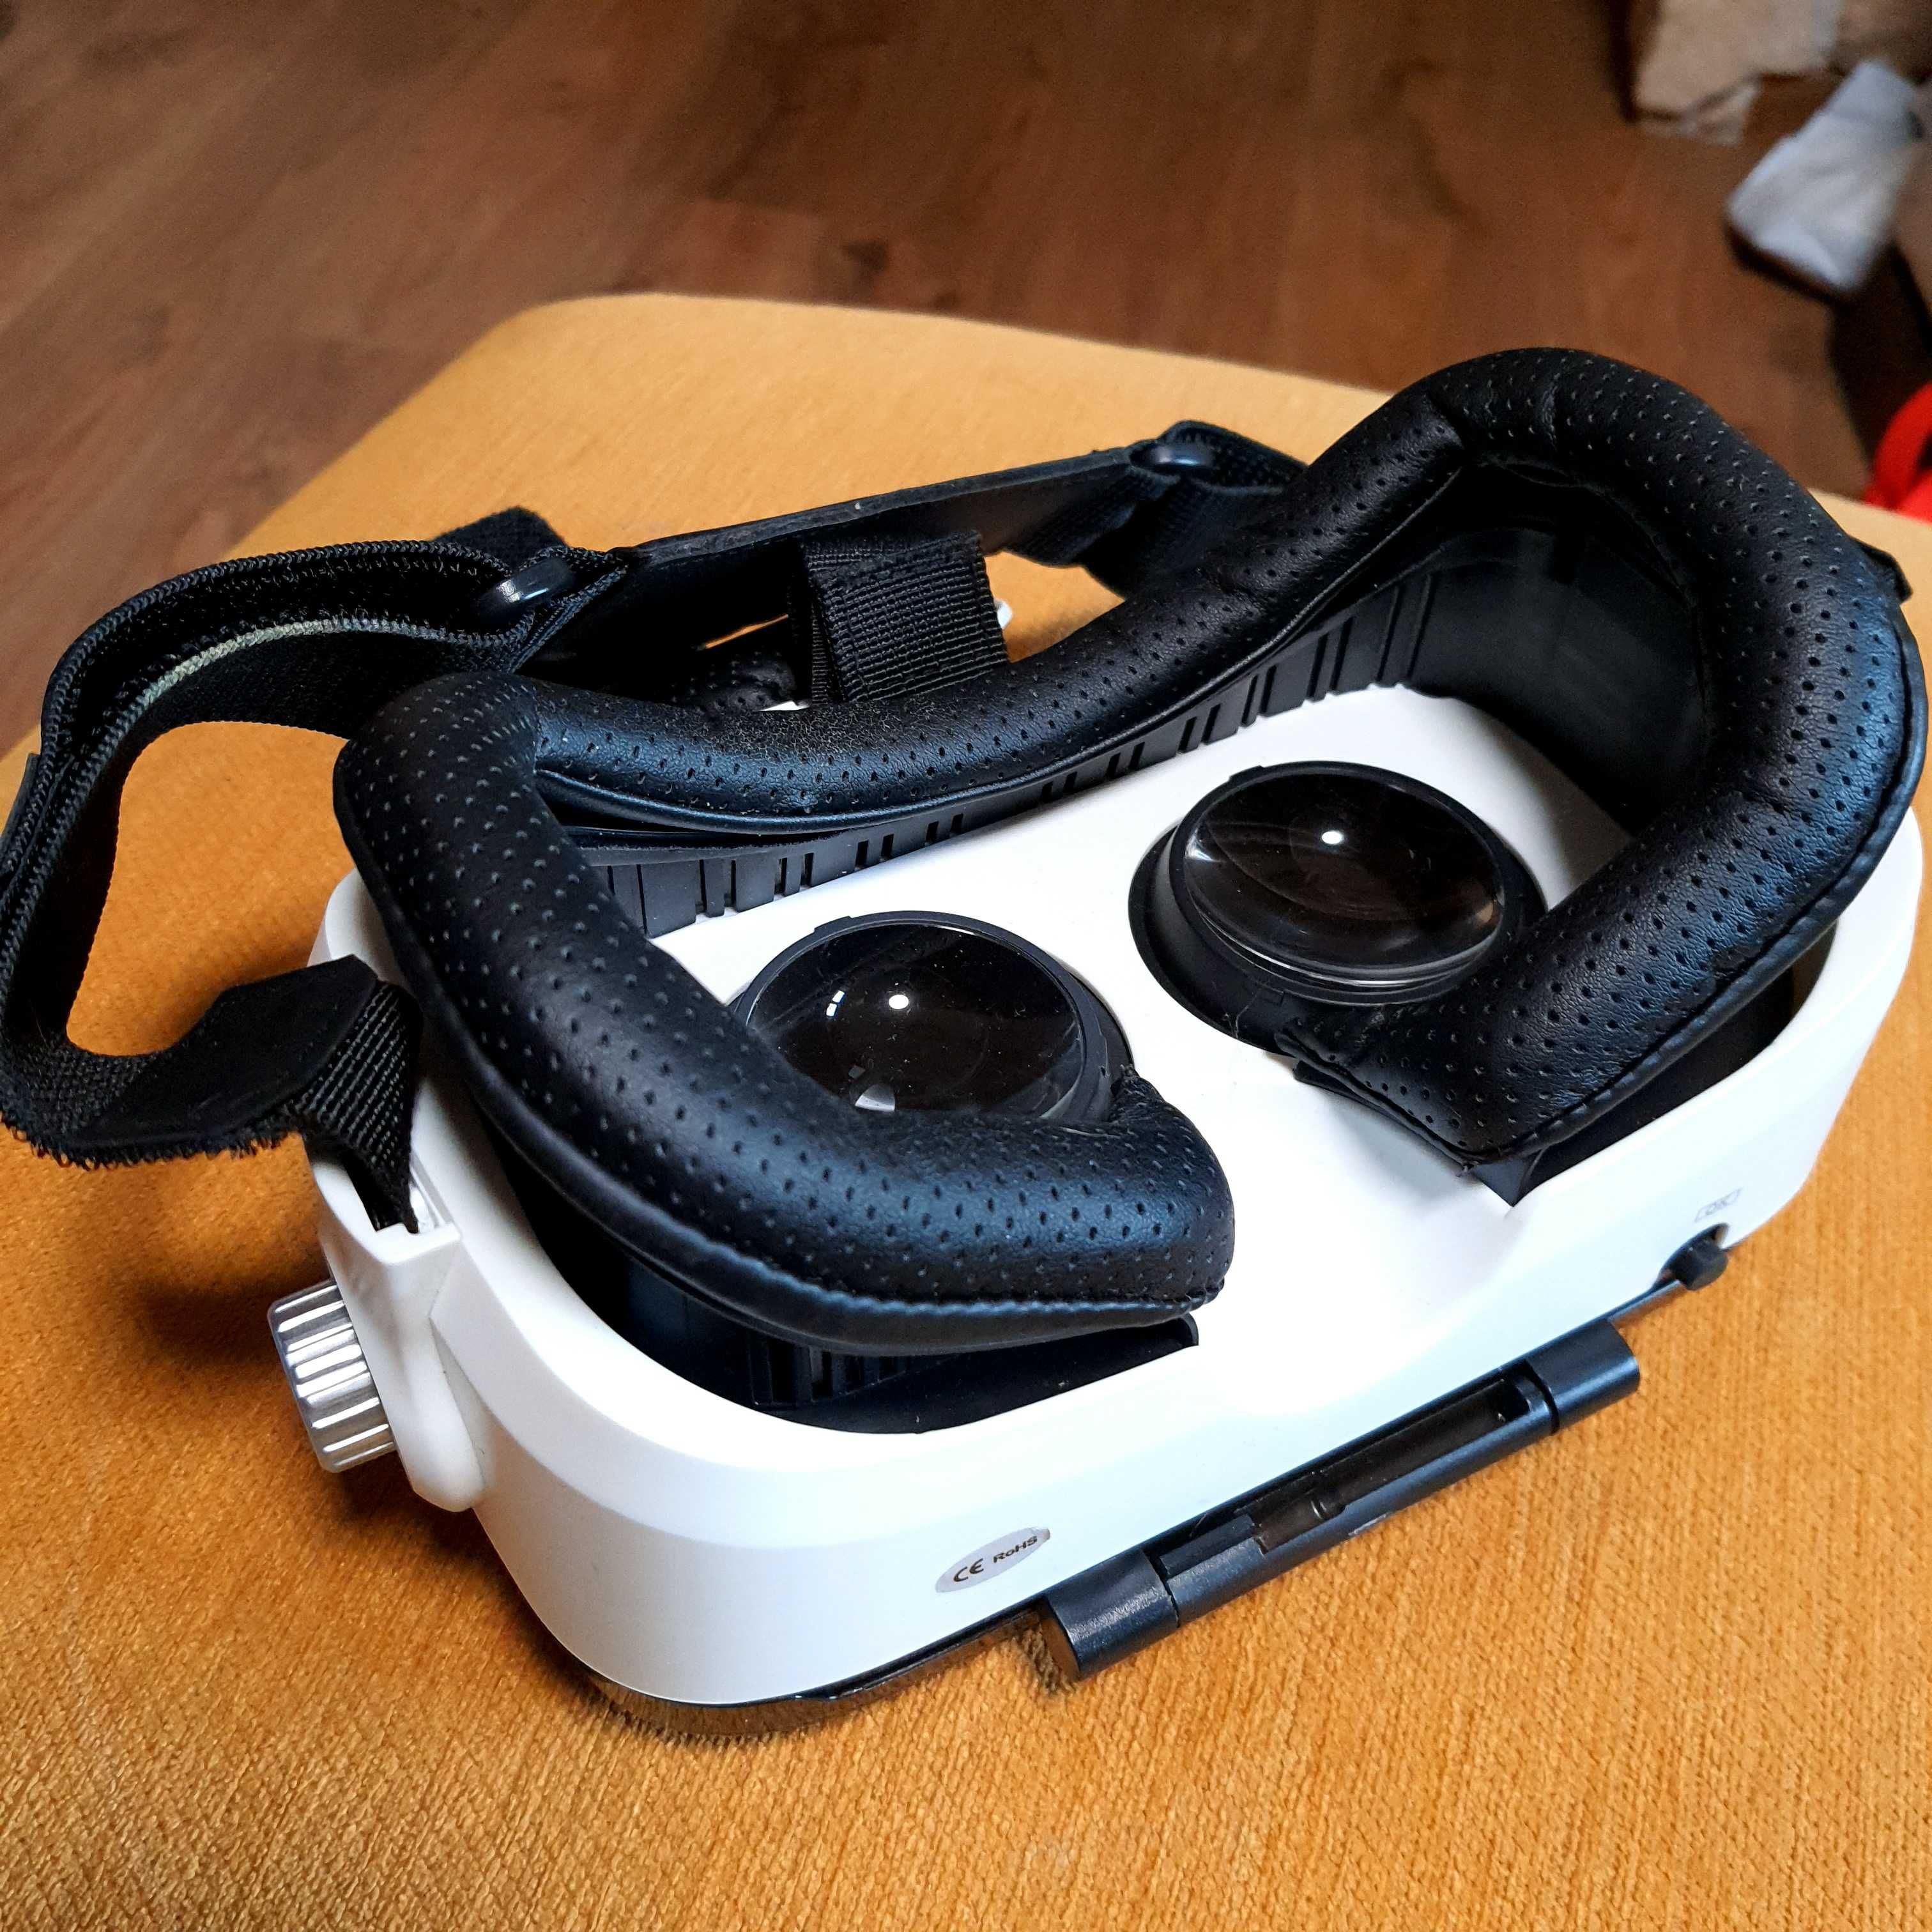 Okulary VR do telefony BOBO VR Z4 + Pad Bluetooth do grania